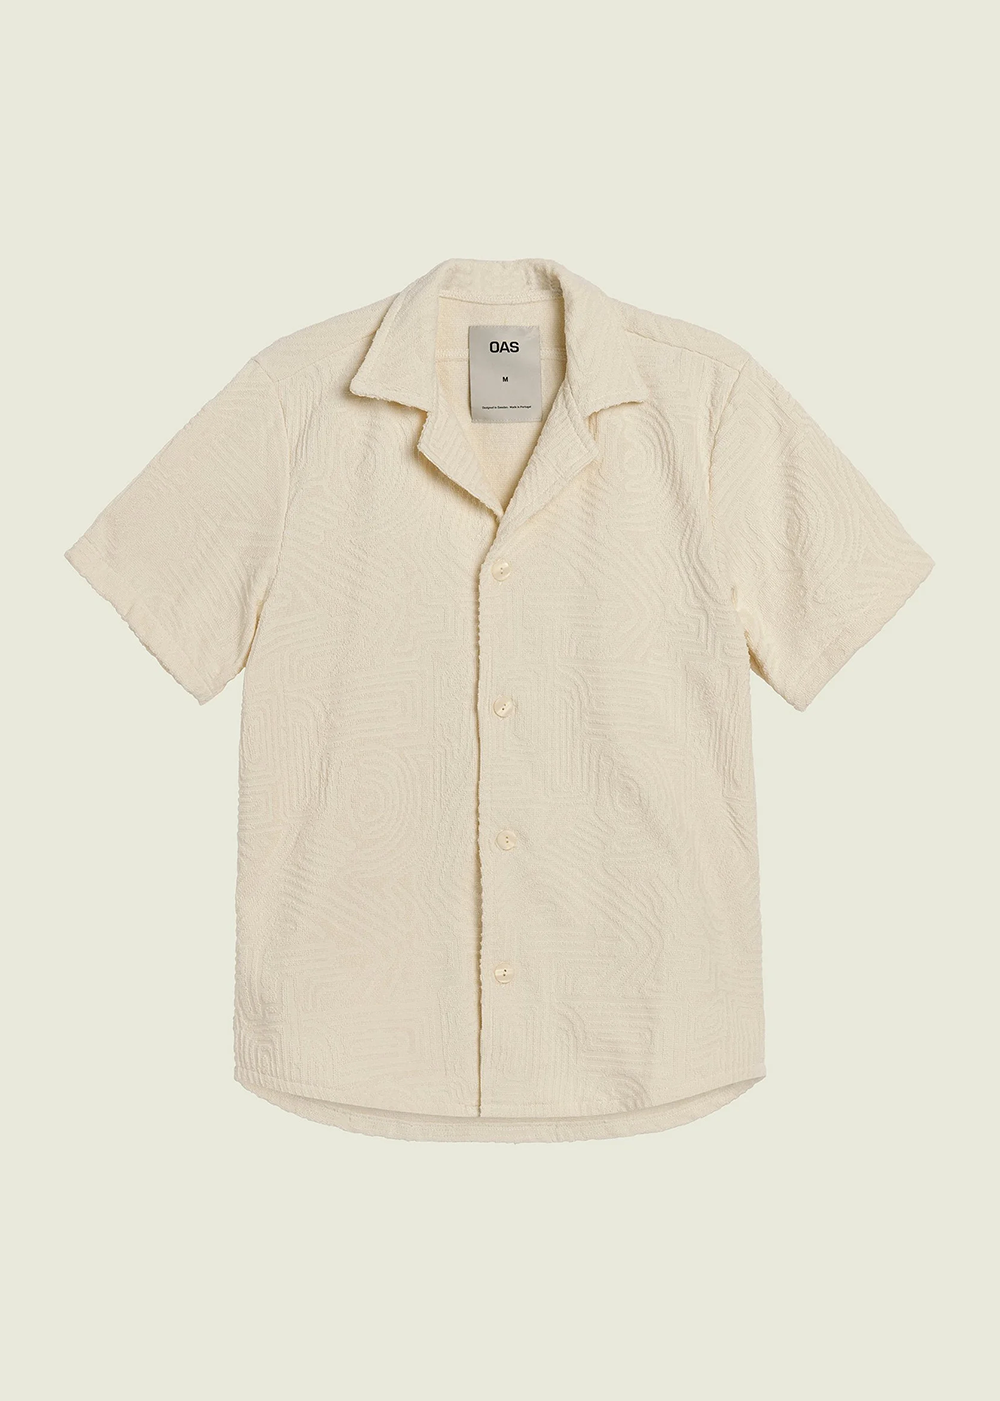 Golconda Cuba Terry Shirt - OAS Company - Danali - 7003-99